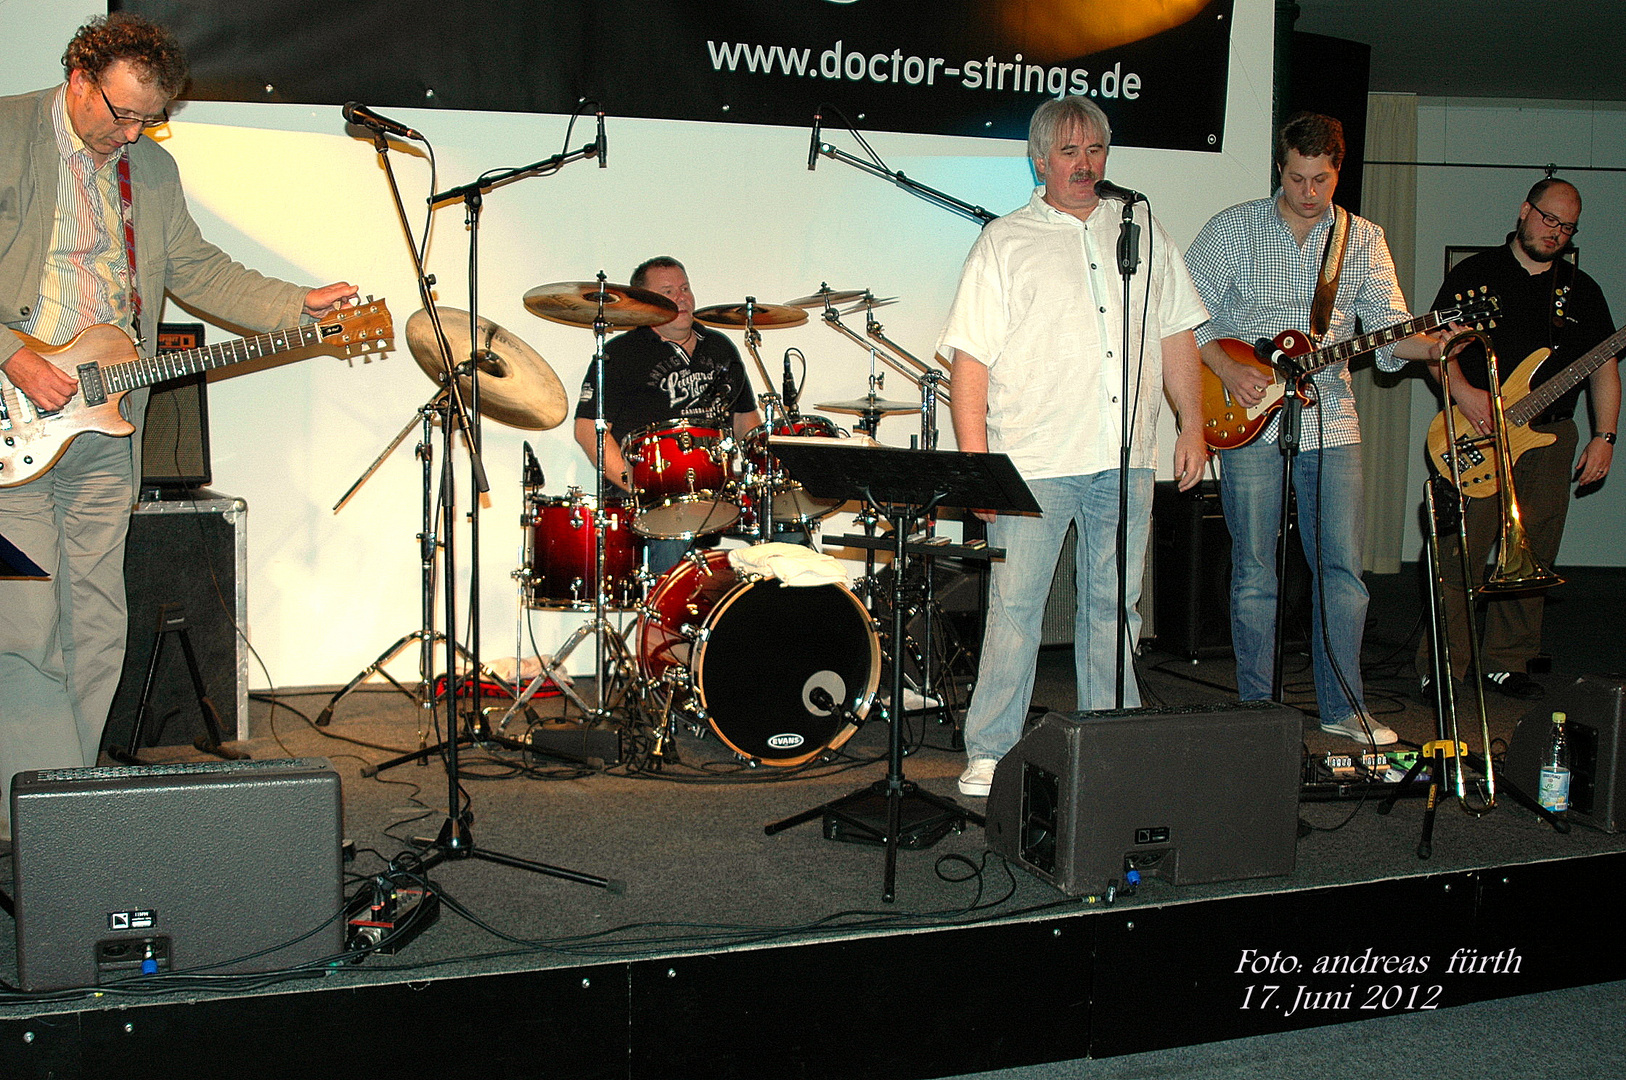 Konzert am 16.Juni 2011 "Doctor Strings Band" Ibach-Haus Schwelm